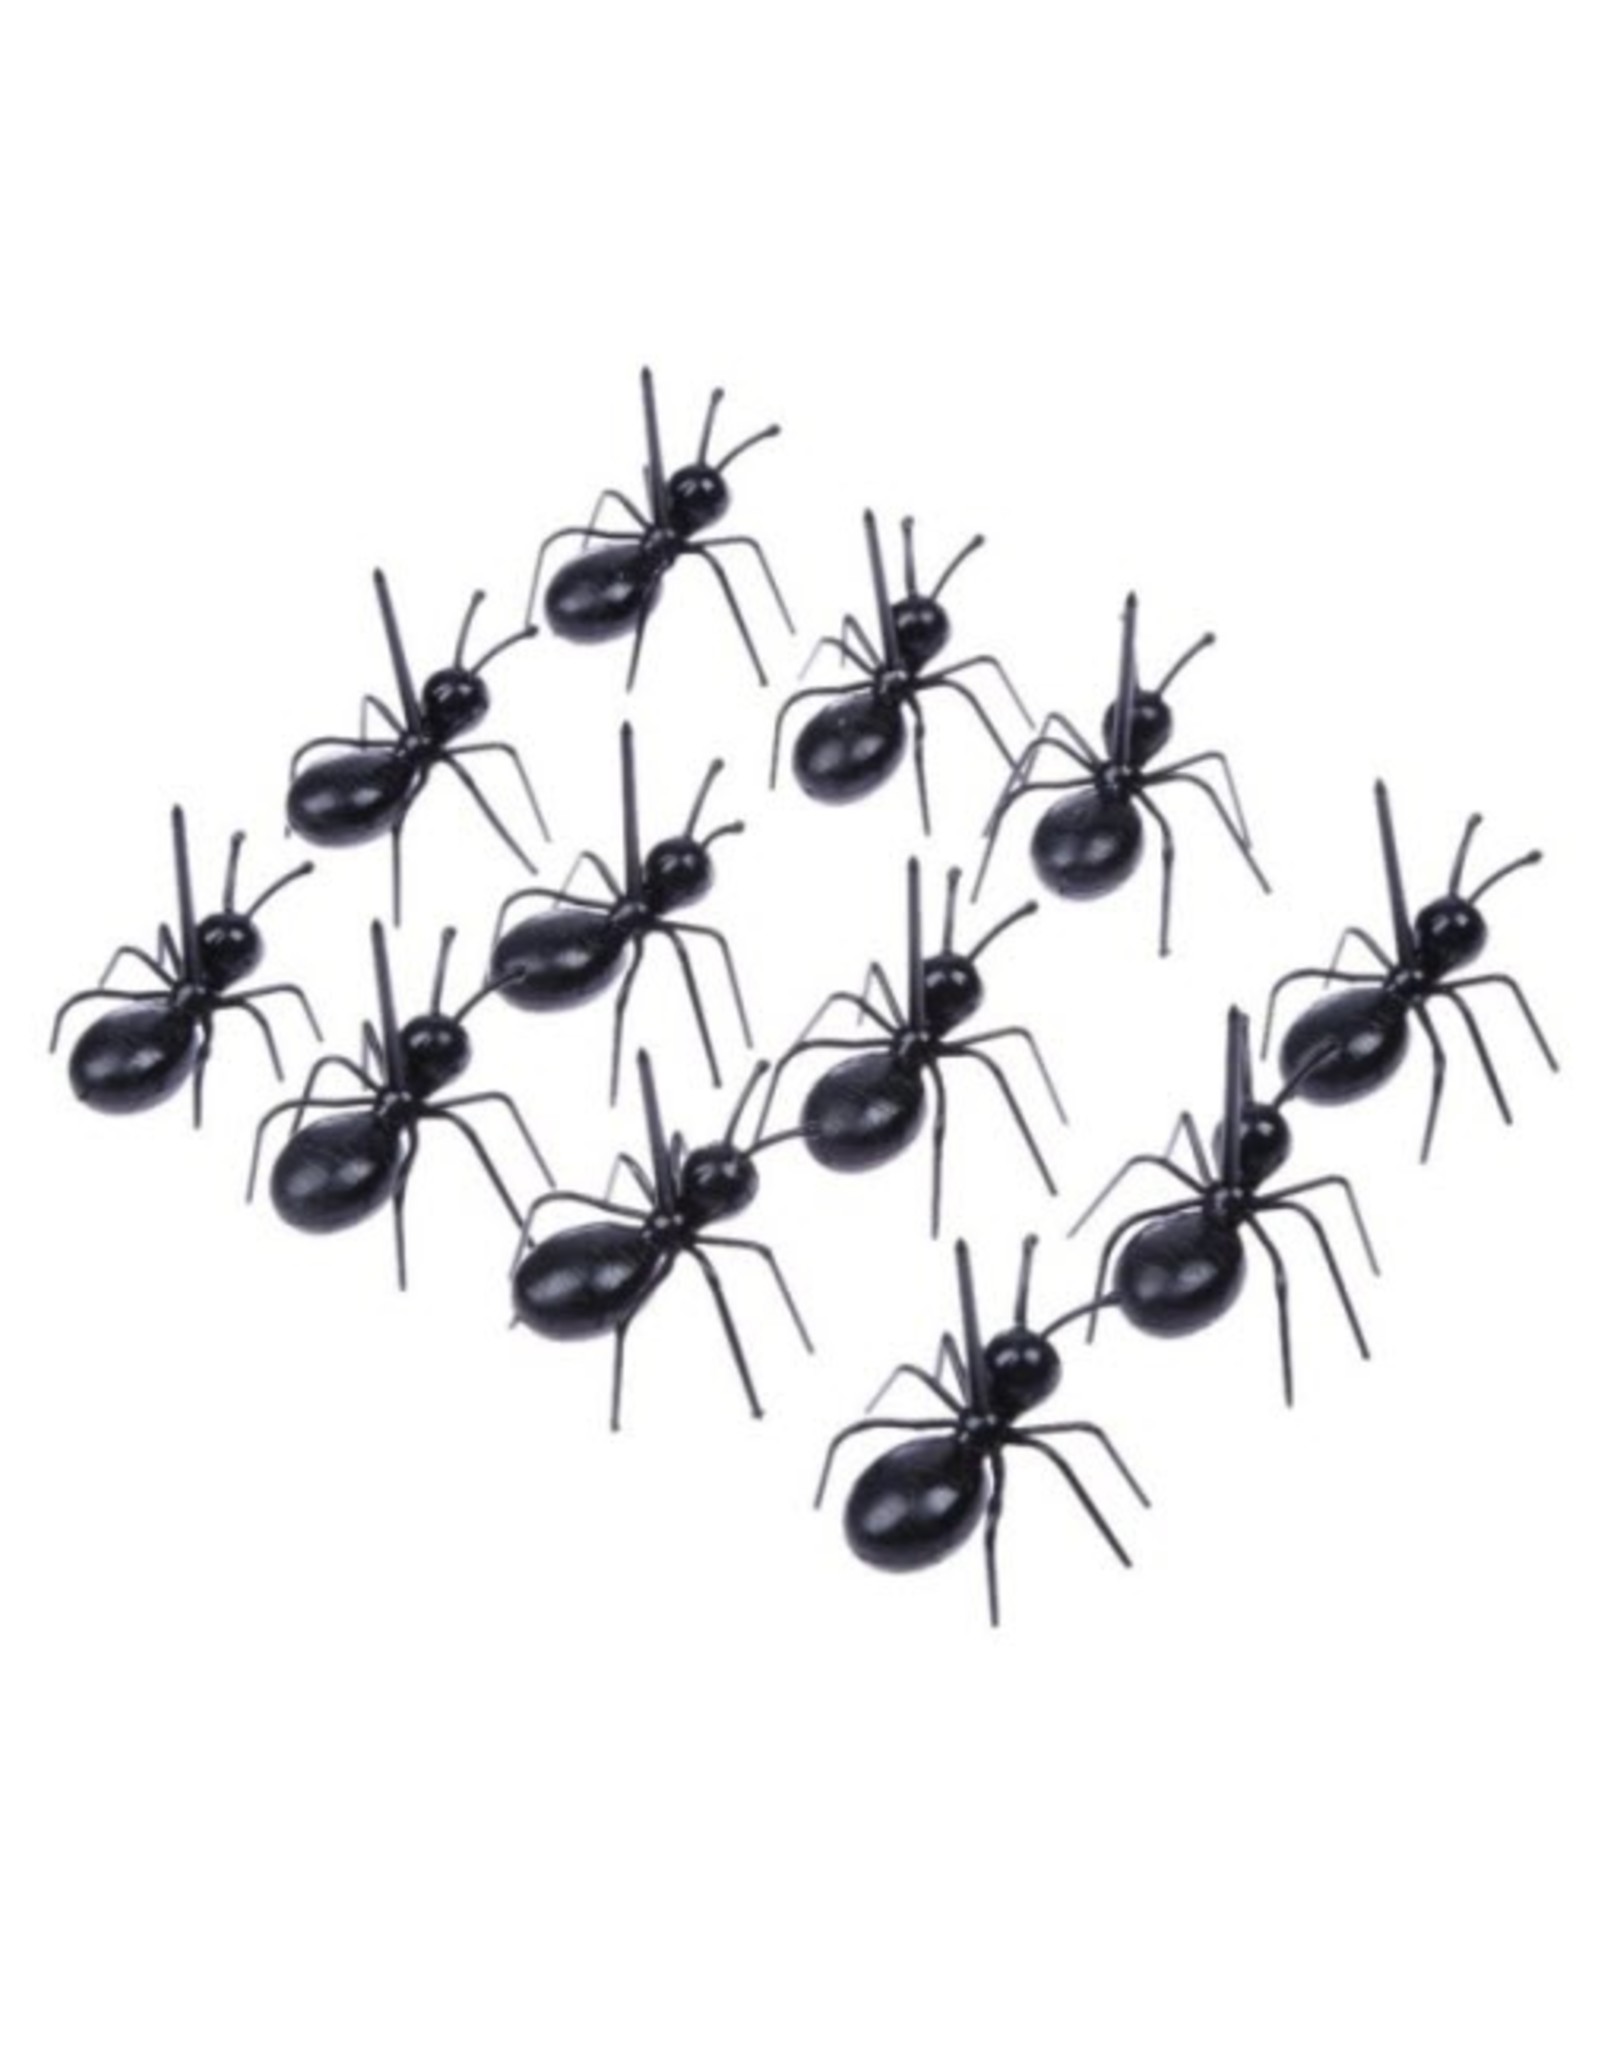 Kikkerland Party Picks Worker Ants